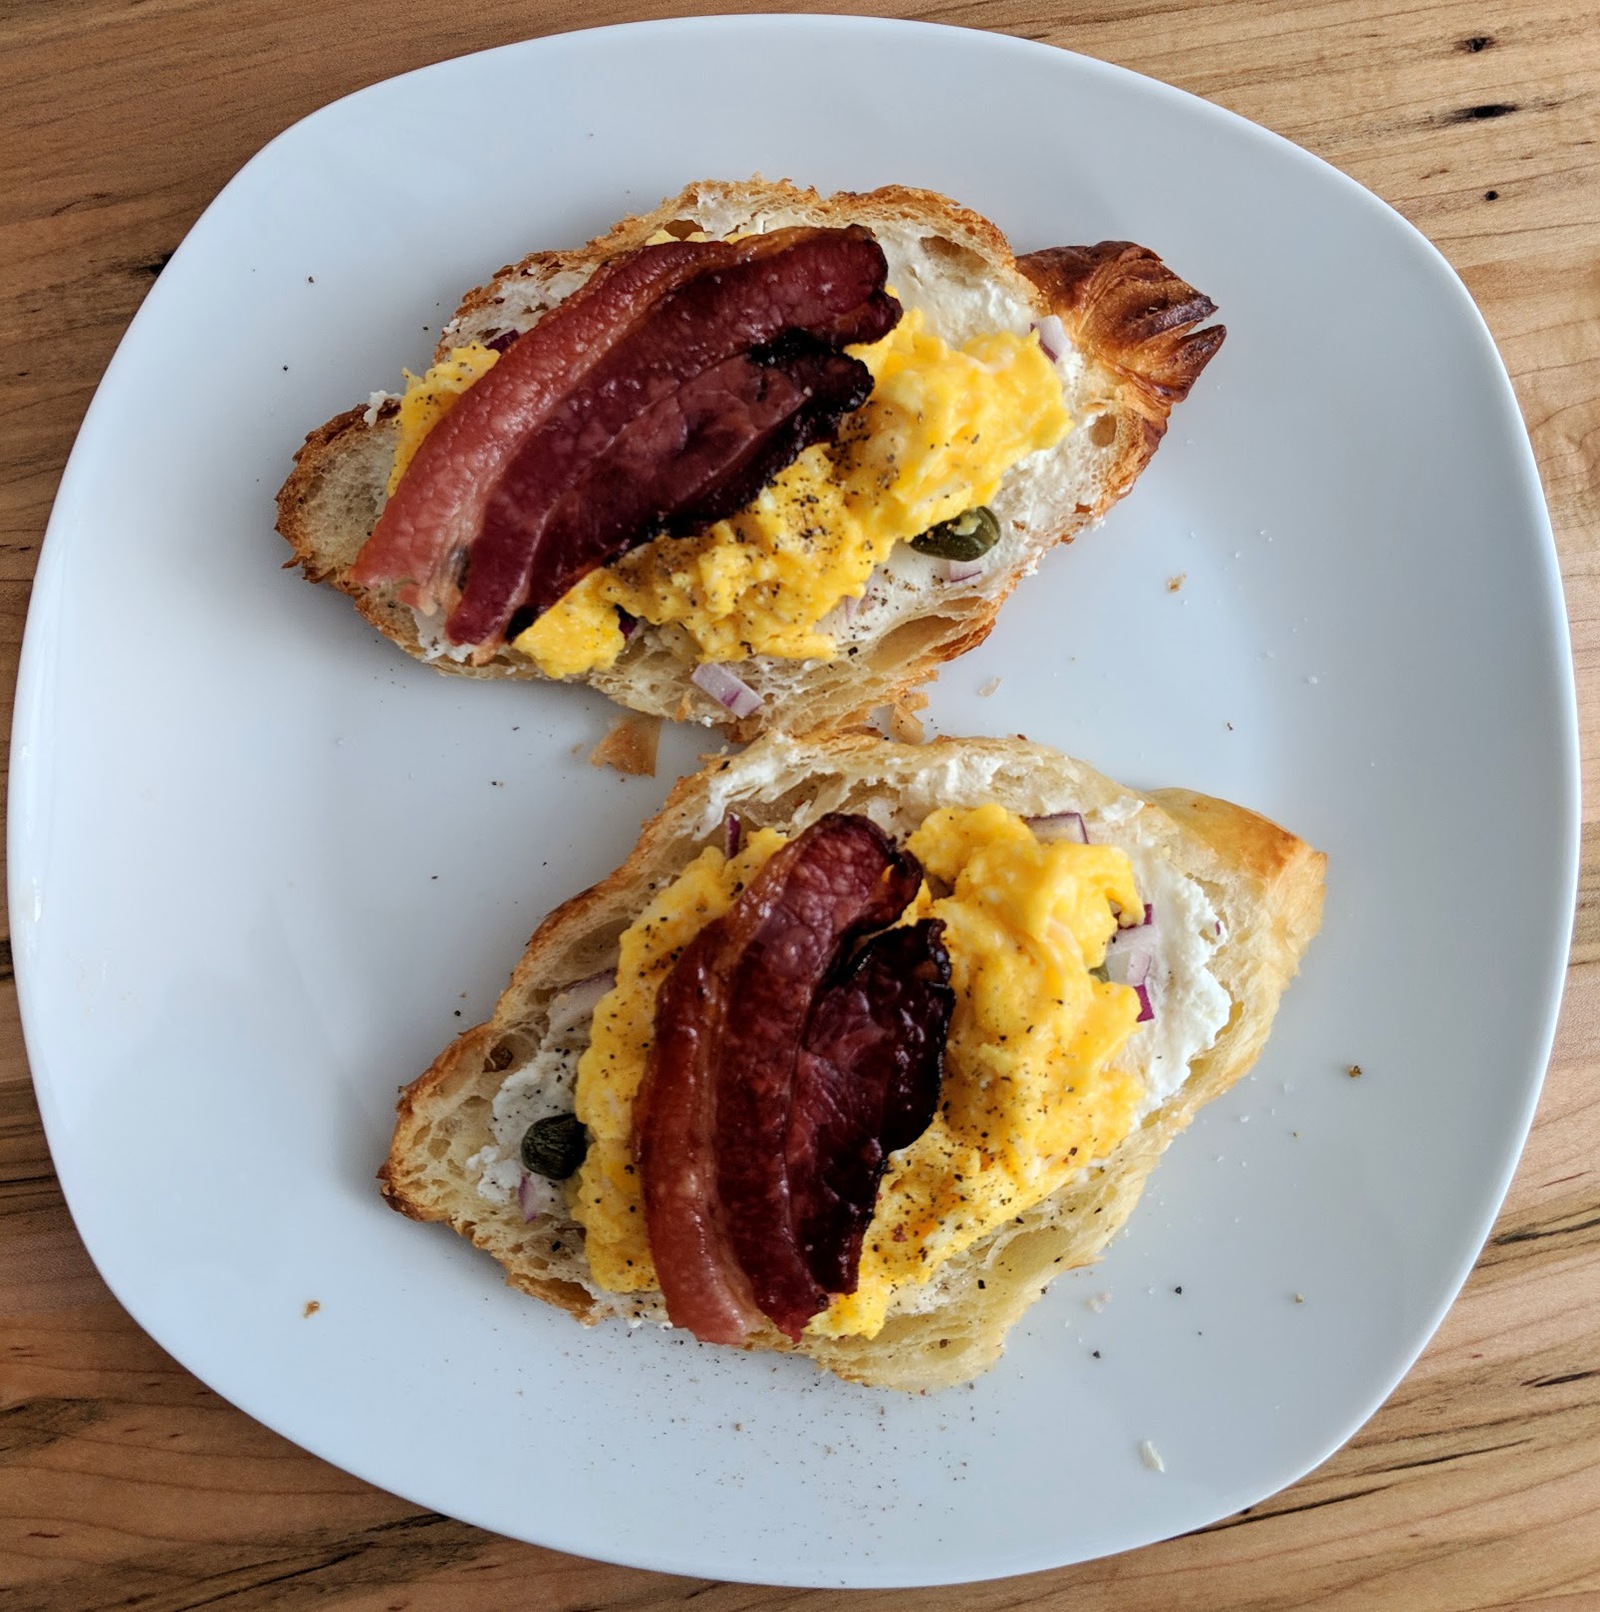 Bird's eye view of the croissant breakfast sandwiches